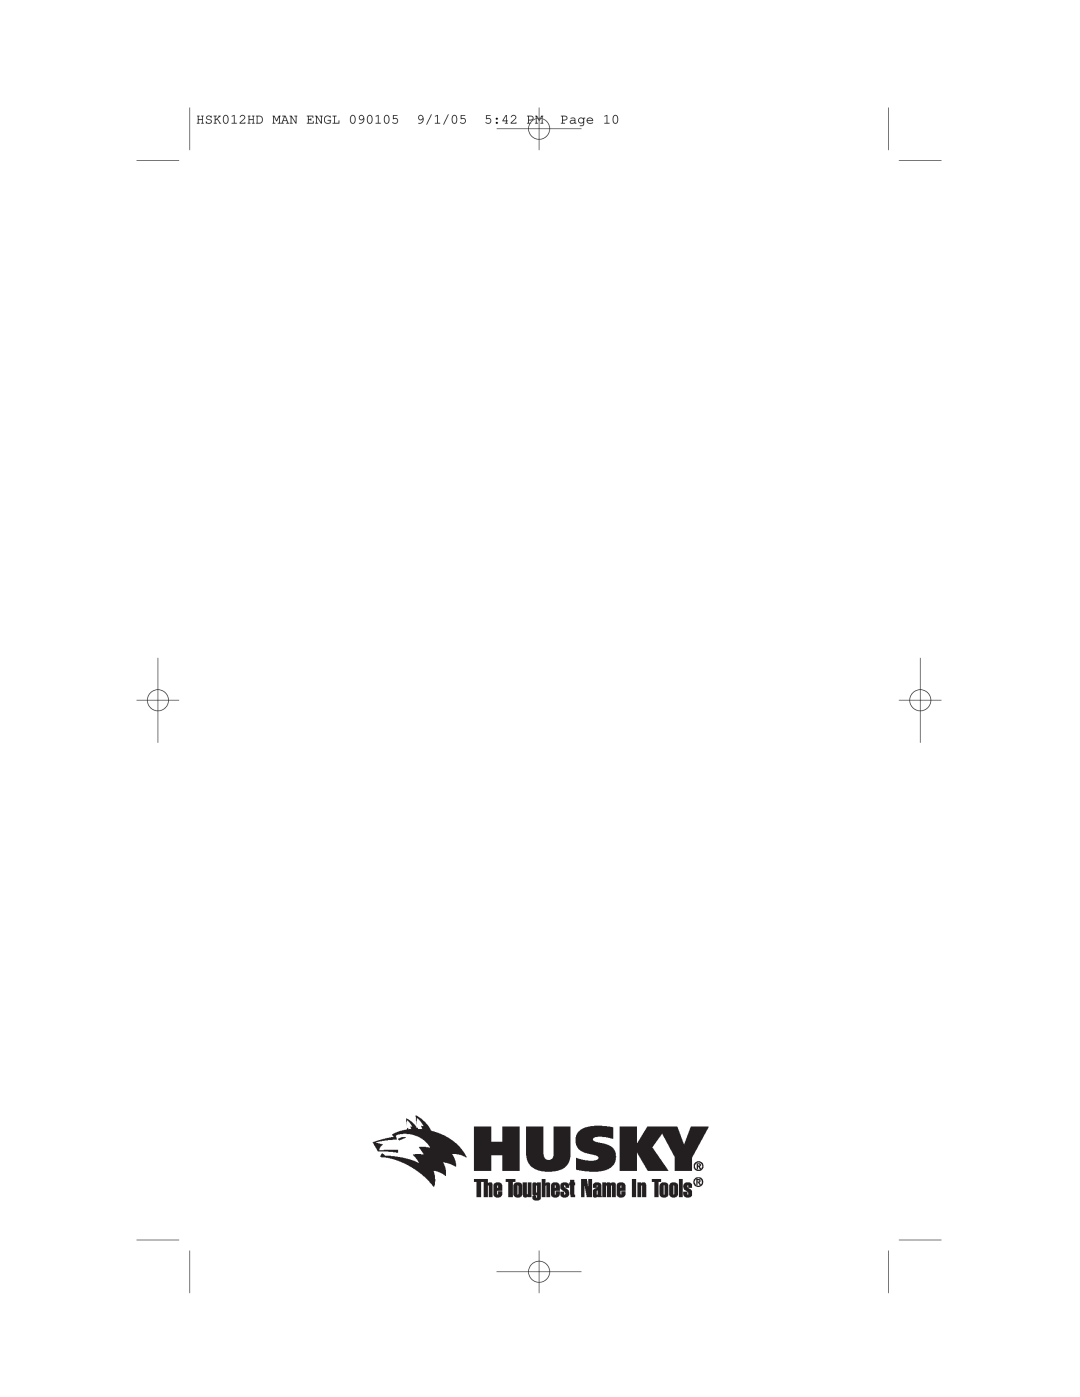 Husky manual HSK012HD MAN ENGL 090105 9/1/05 542 PM Page 